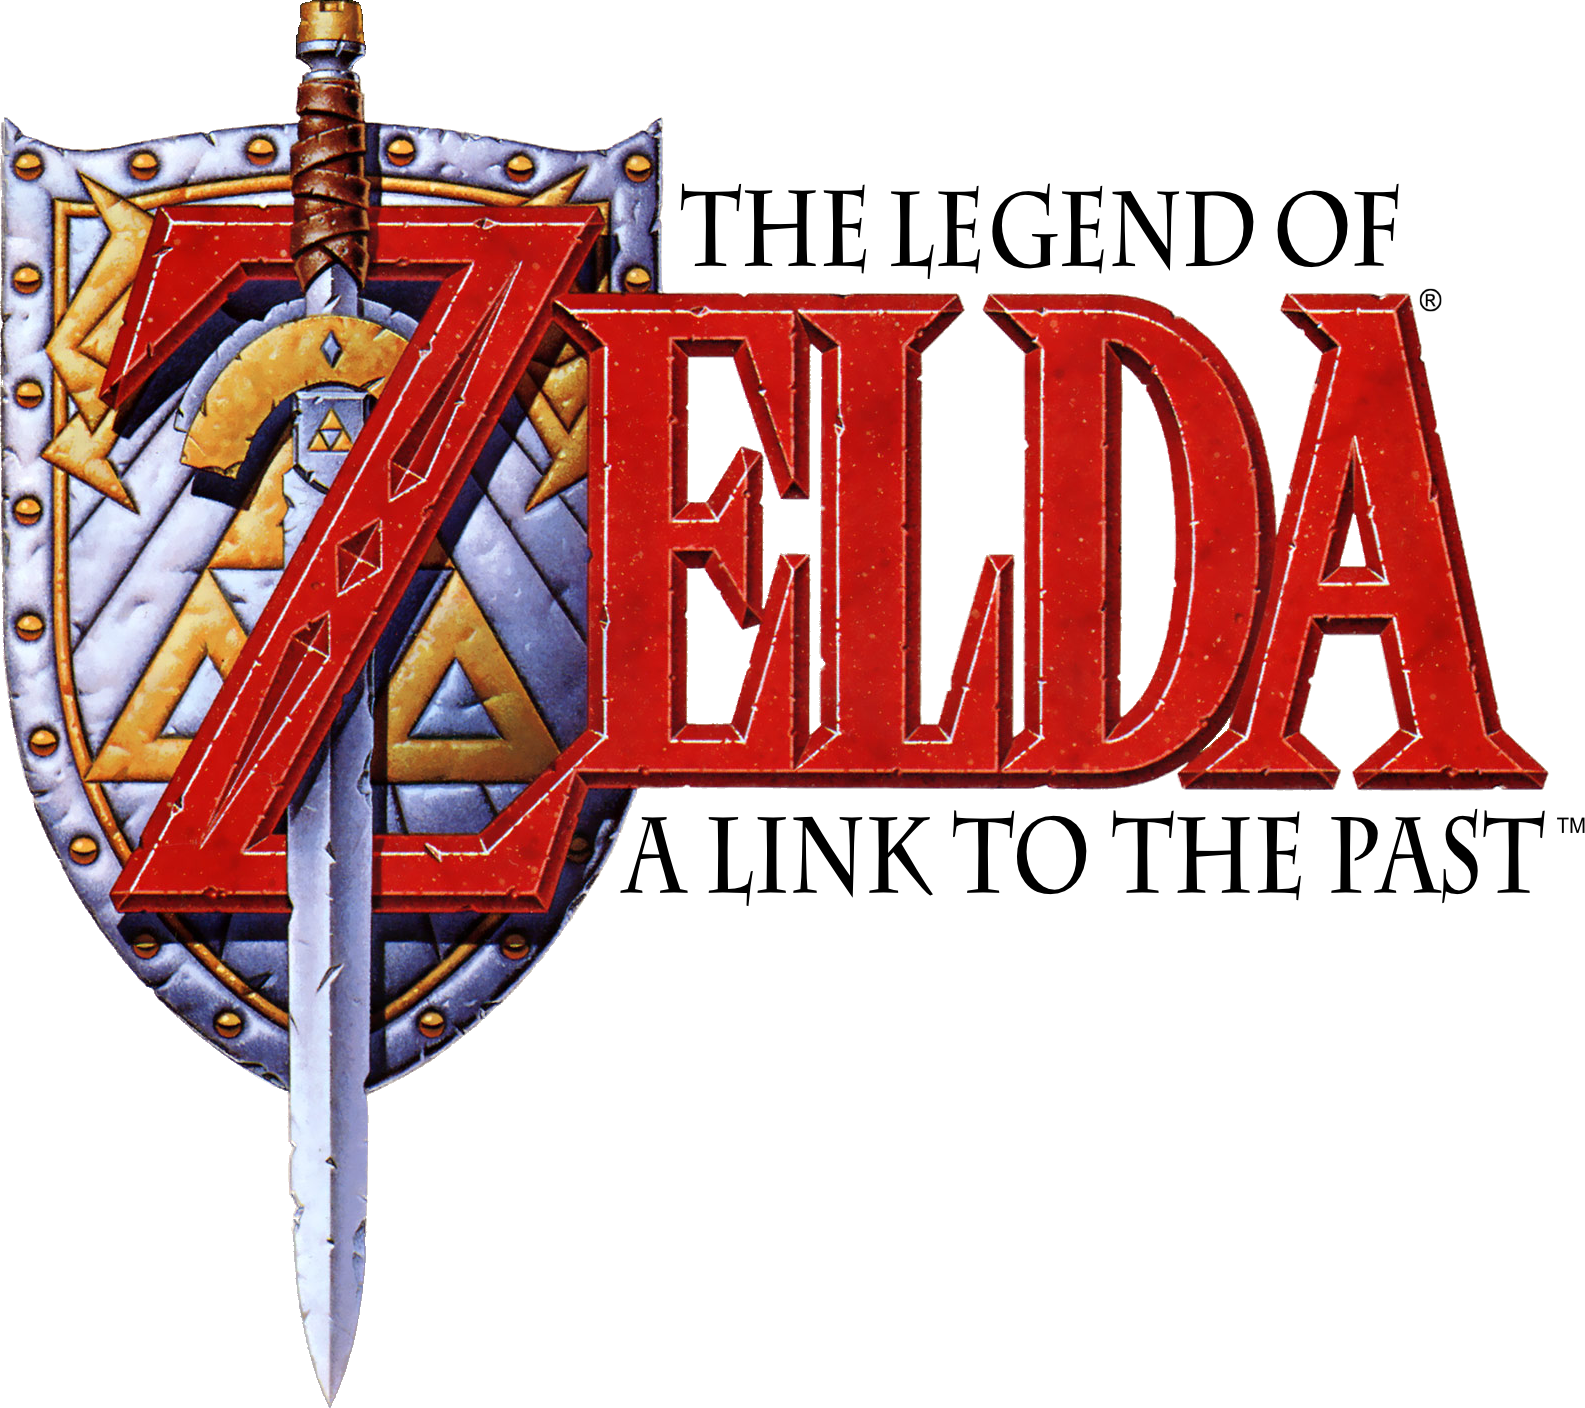 The Legend of Zelda: A Link to the Past & Four Swords, Game Boy Advance, Jogos